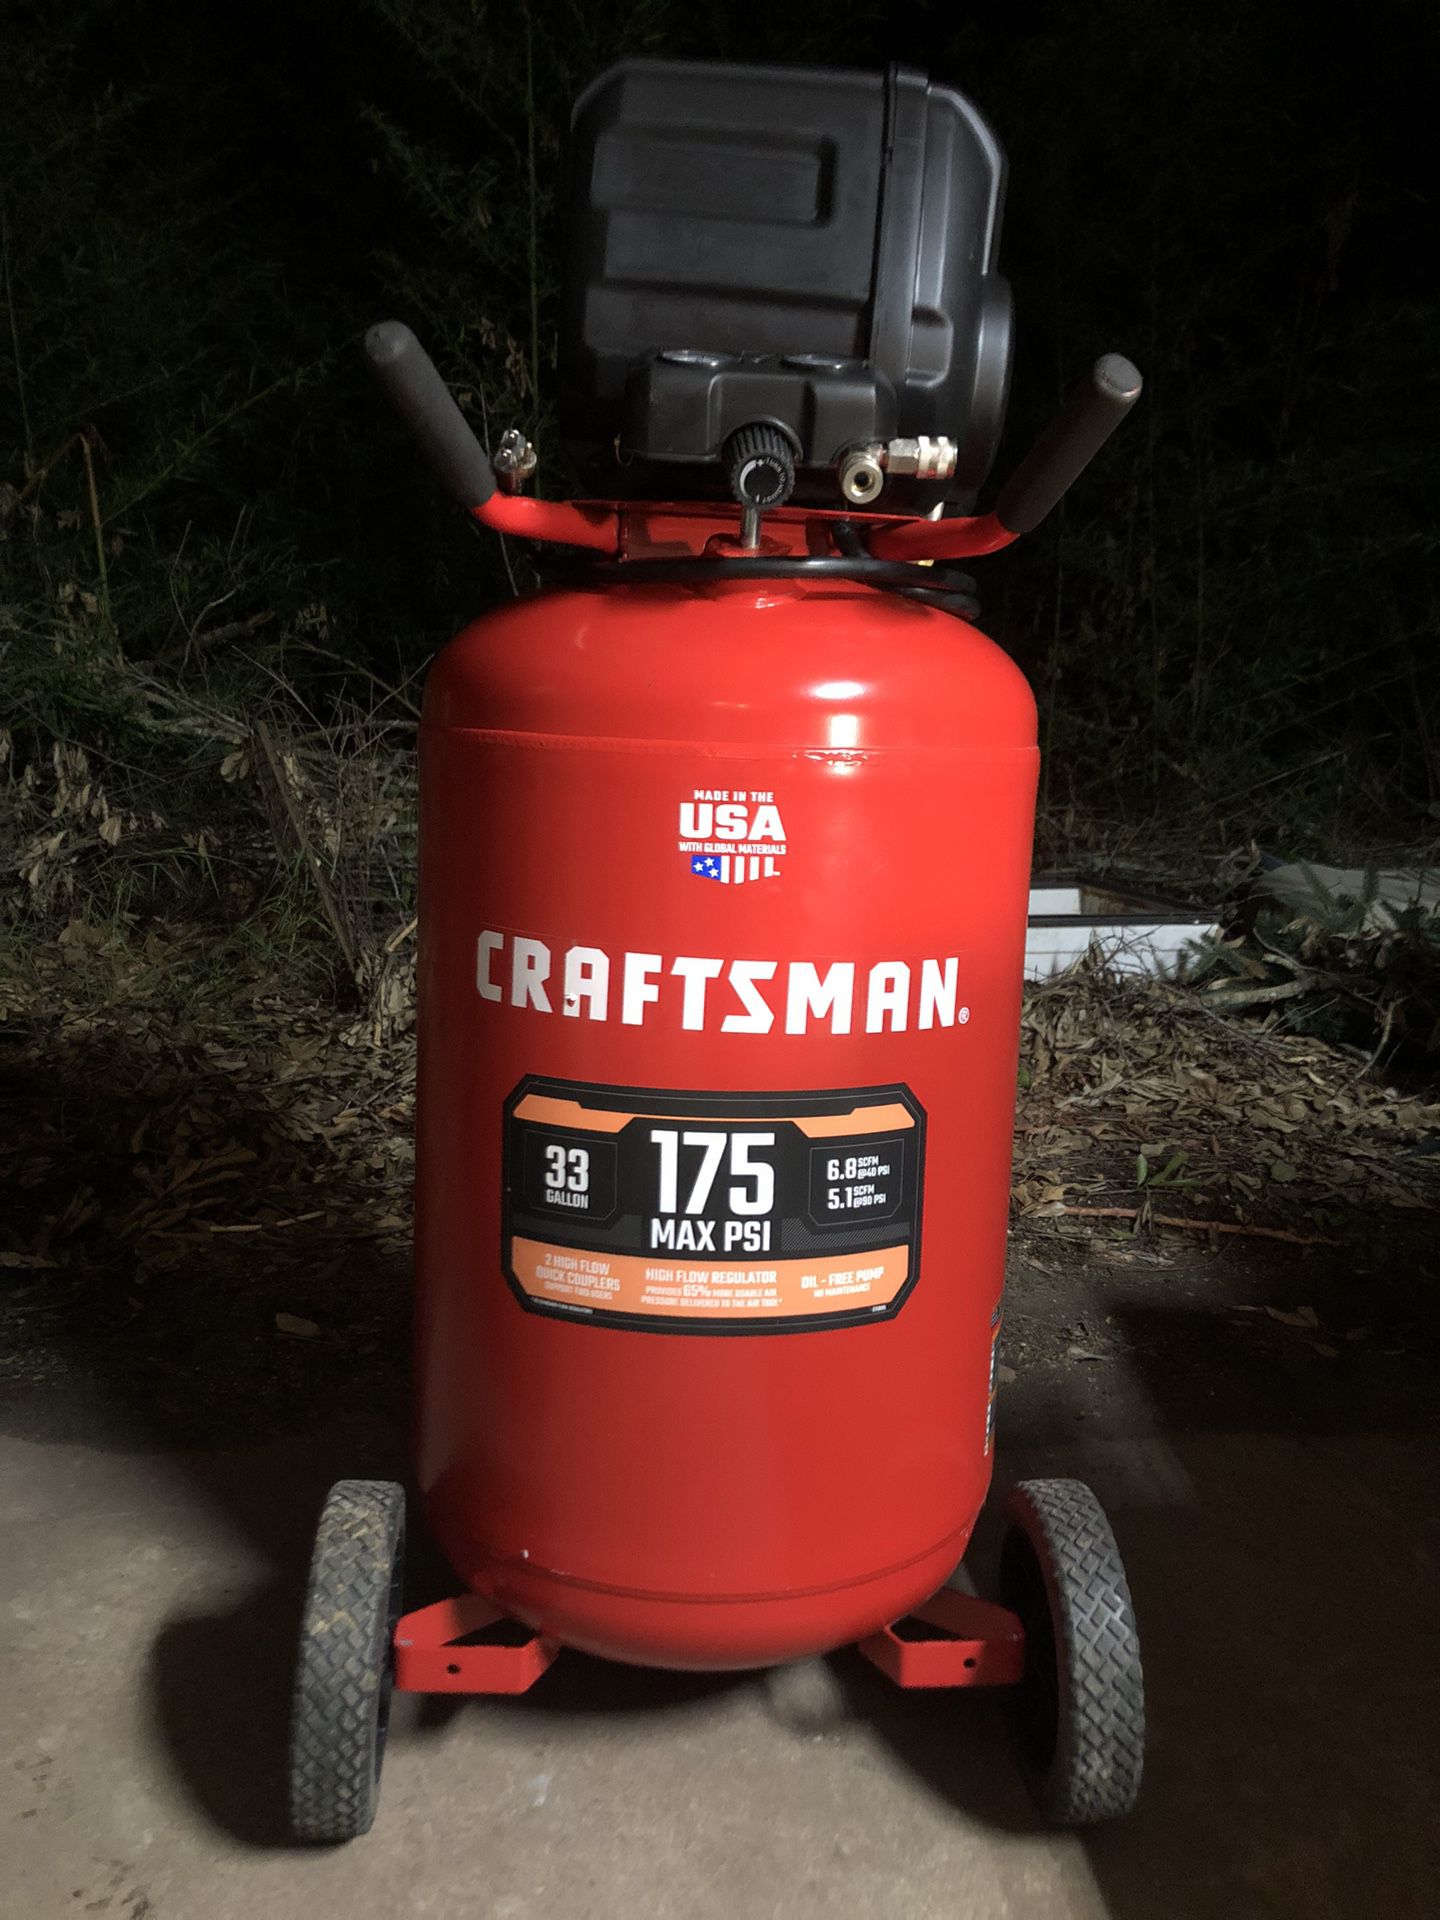 Craftsman air compressor, 30 gallon electric